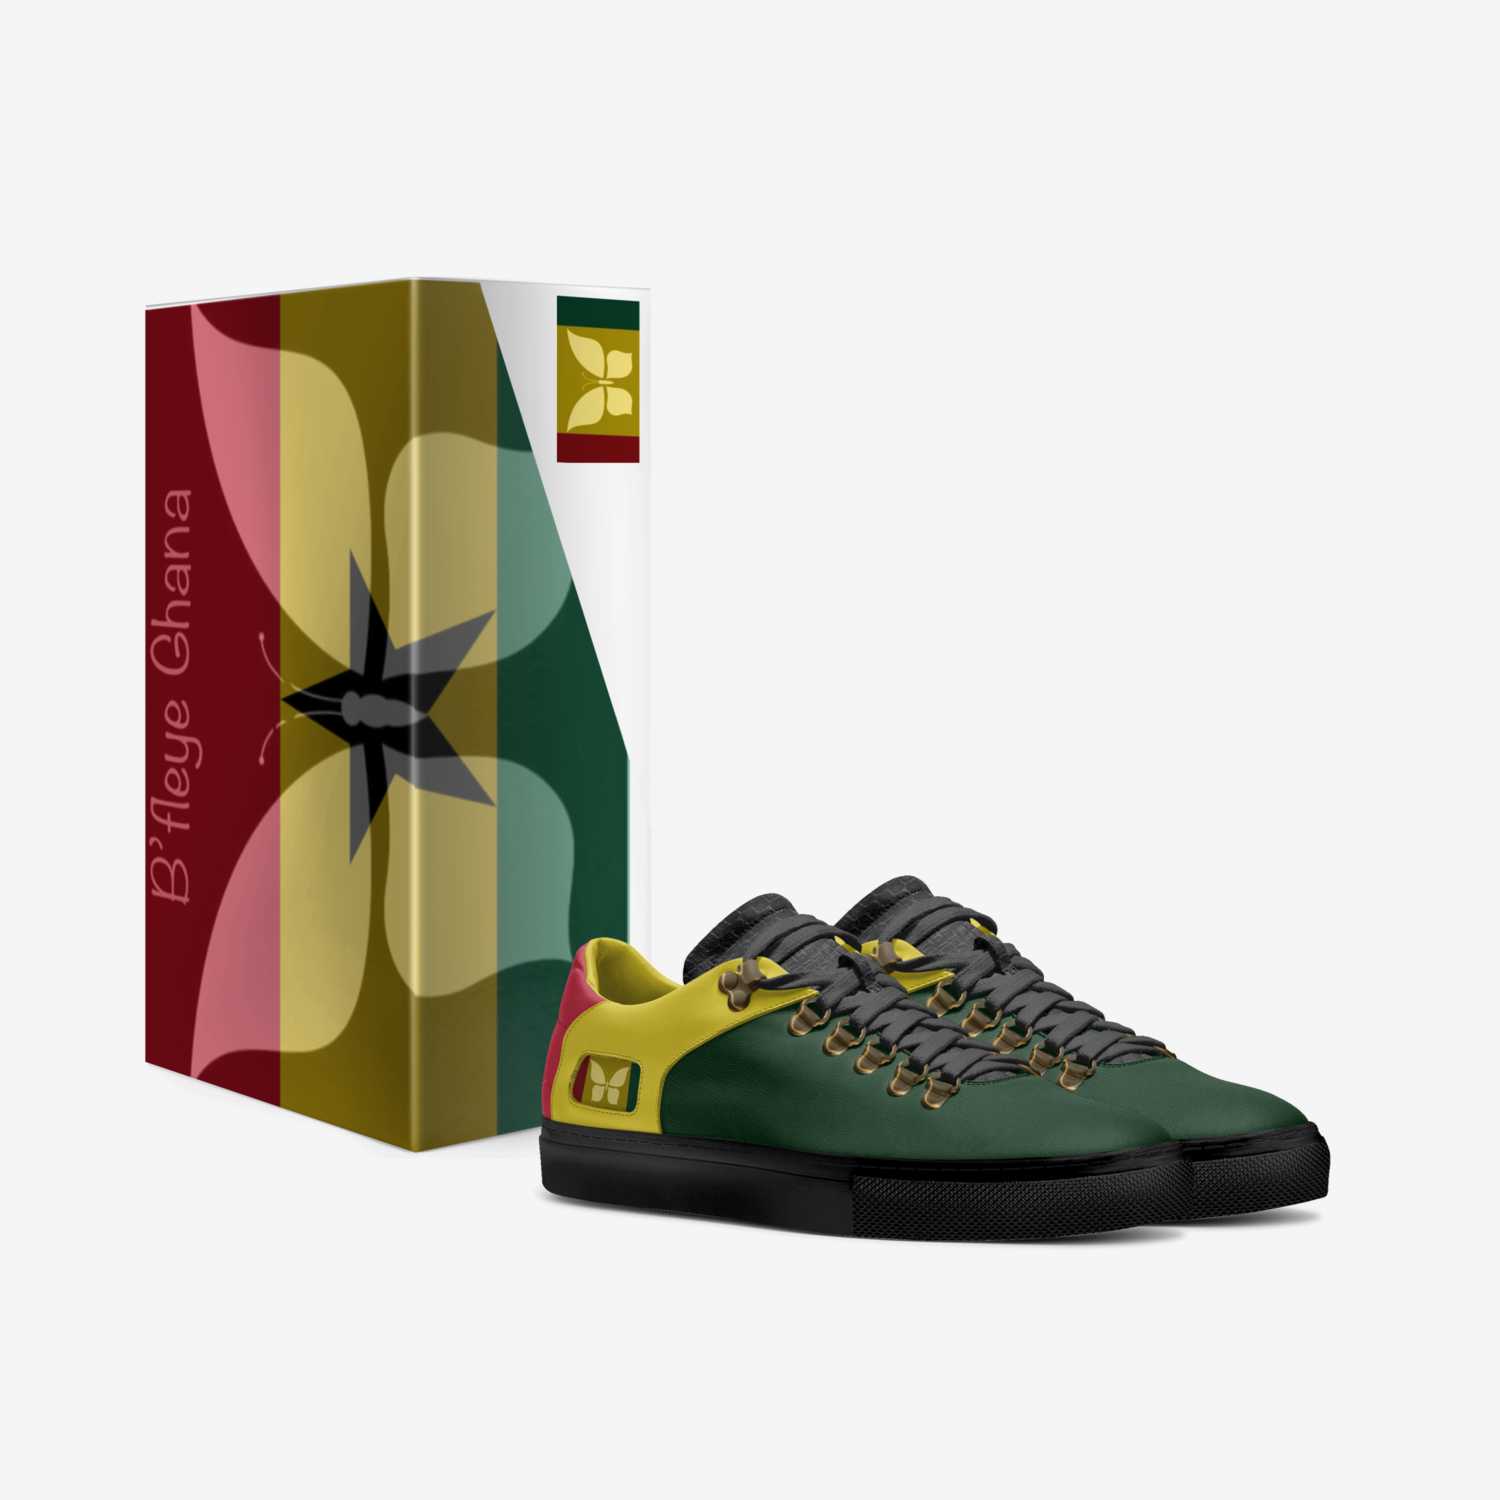 B’fleye Ghana custom made in Italy shoes by Cj Butterfleye | Box view